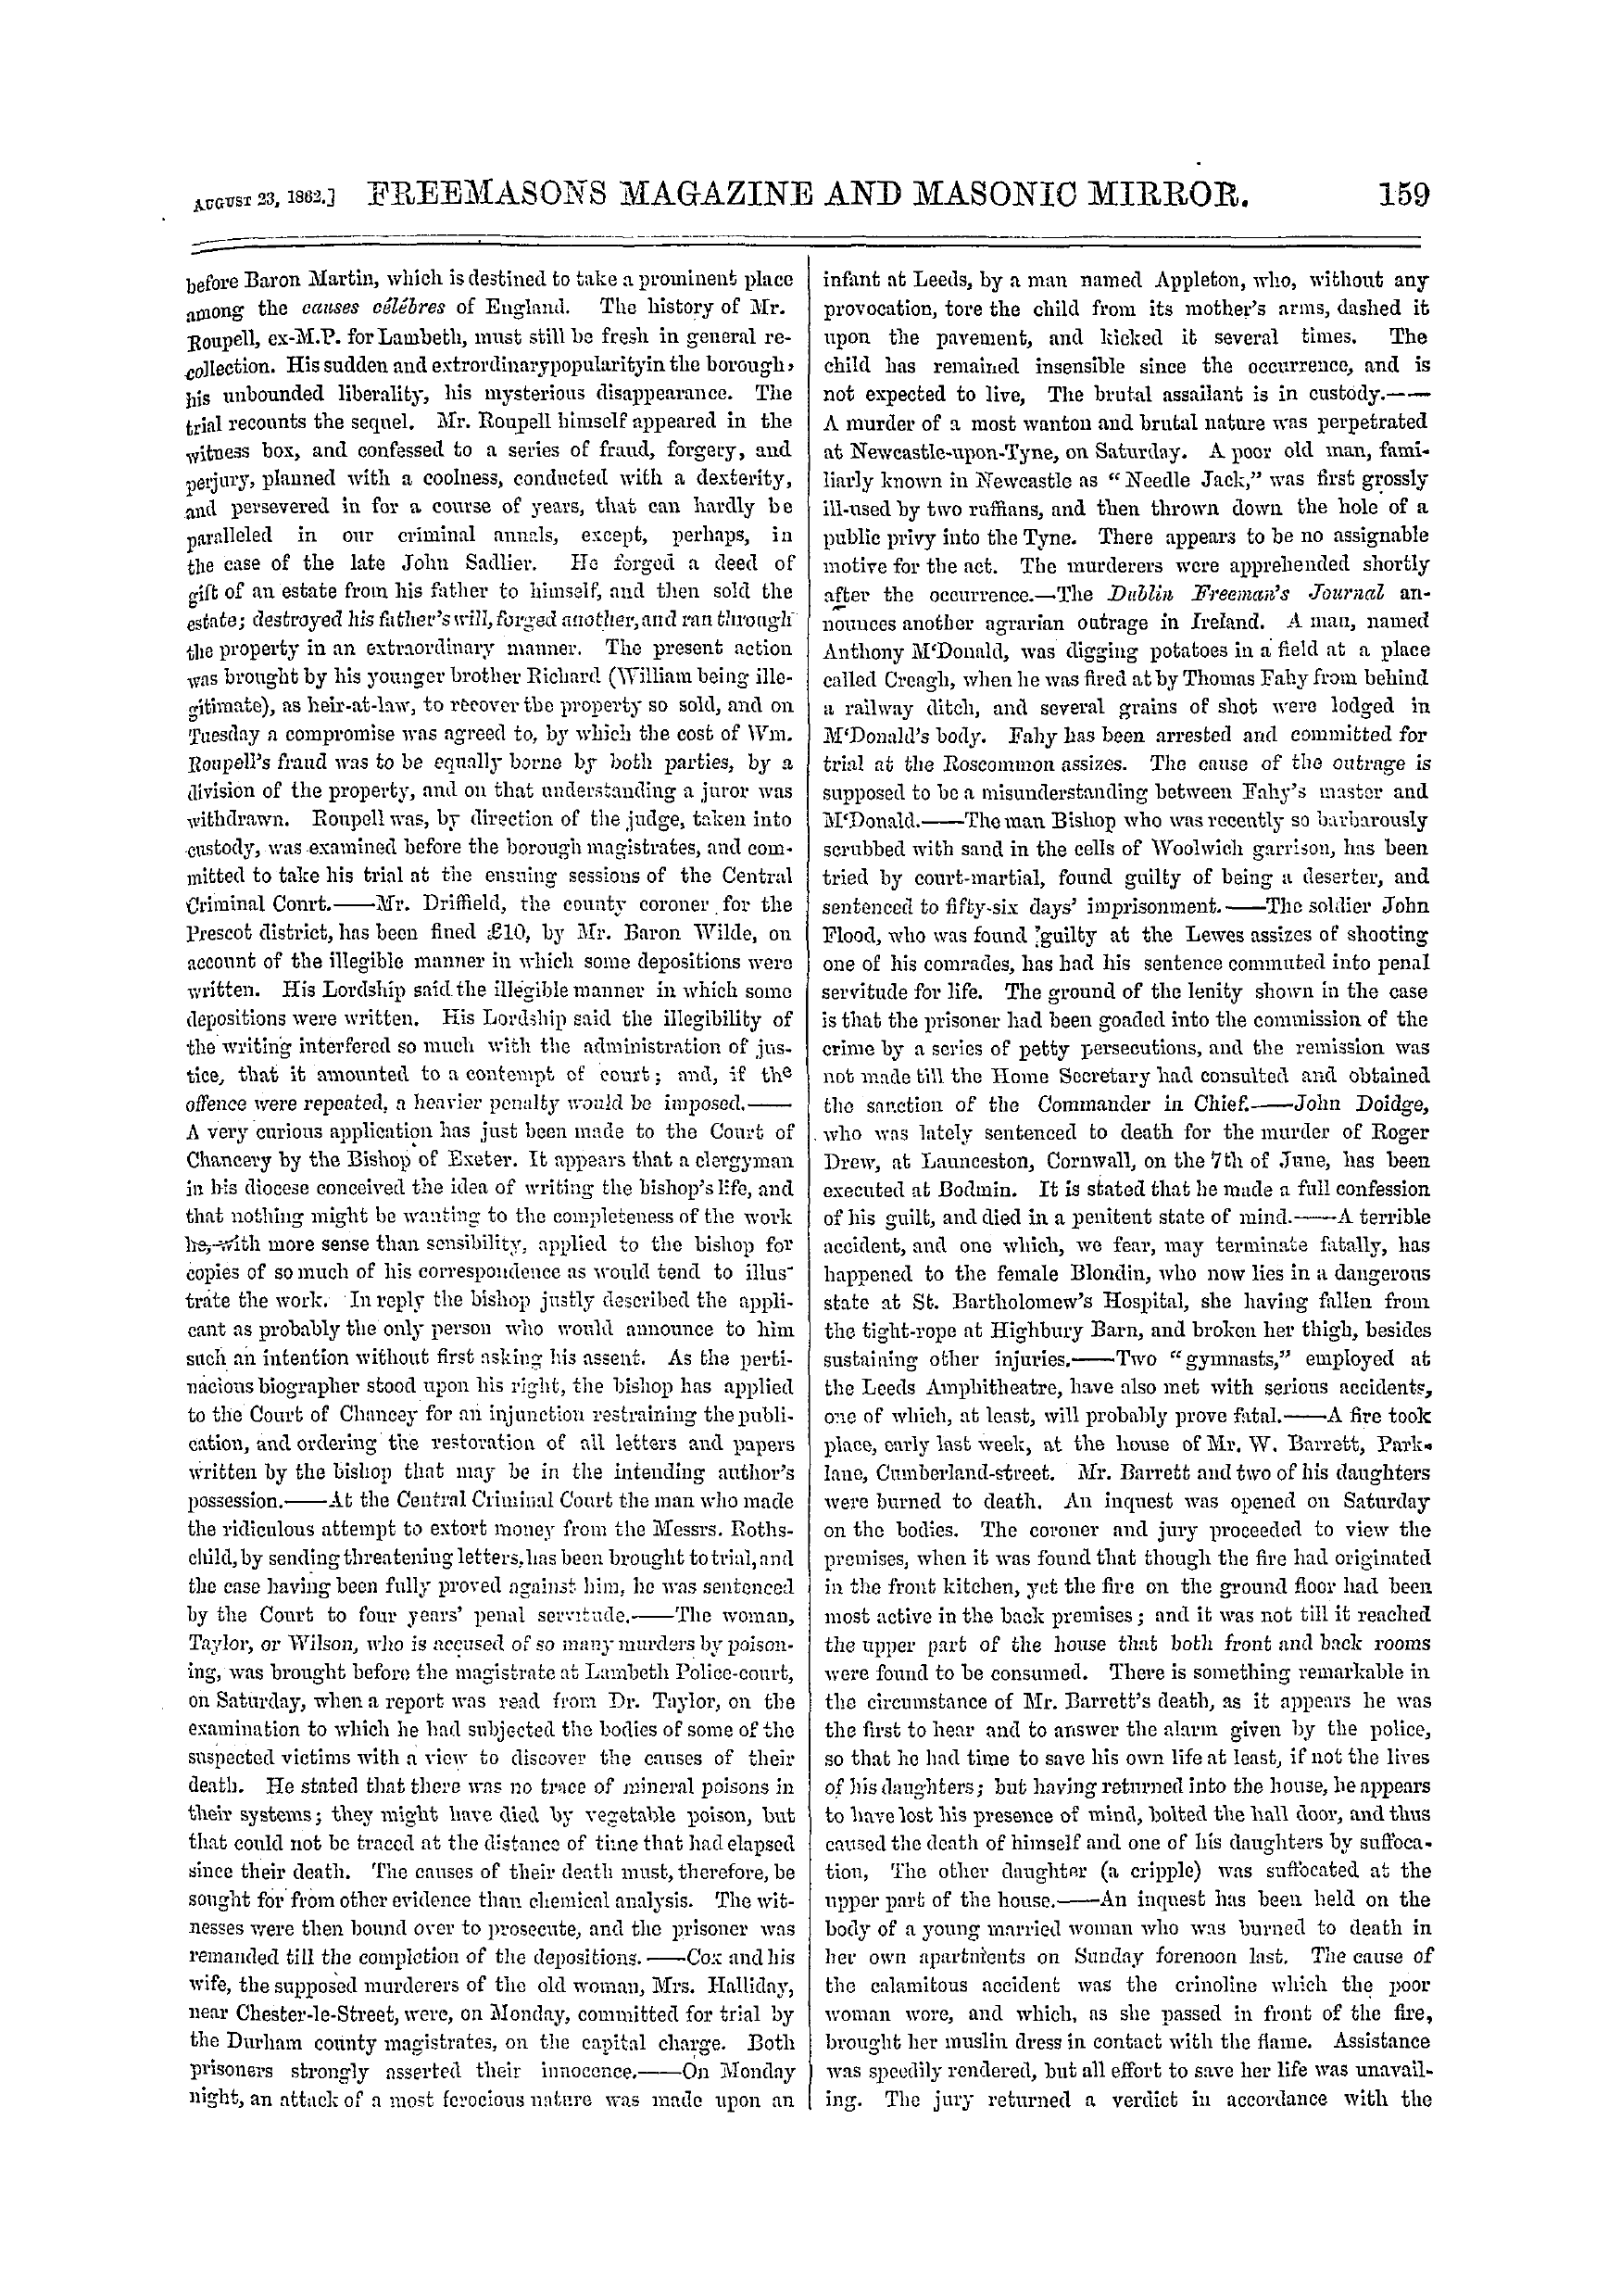 The Freemasons' Monthly Magazine: 1862-08-23 - The Week.